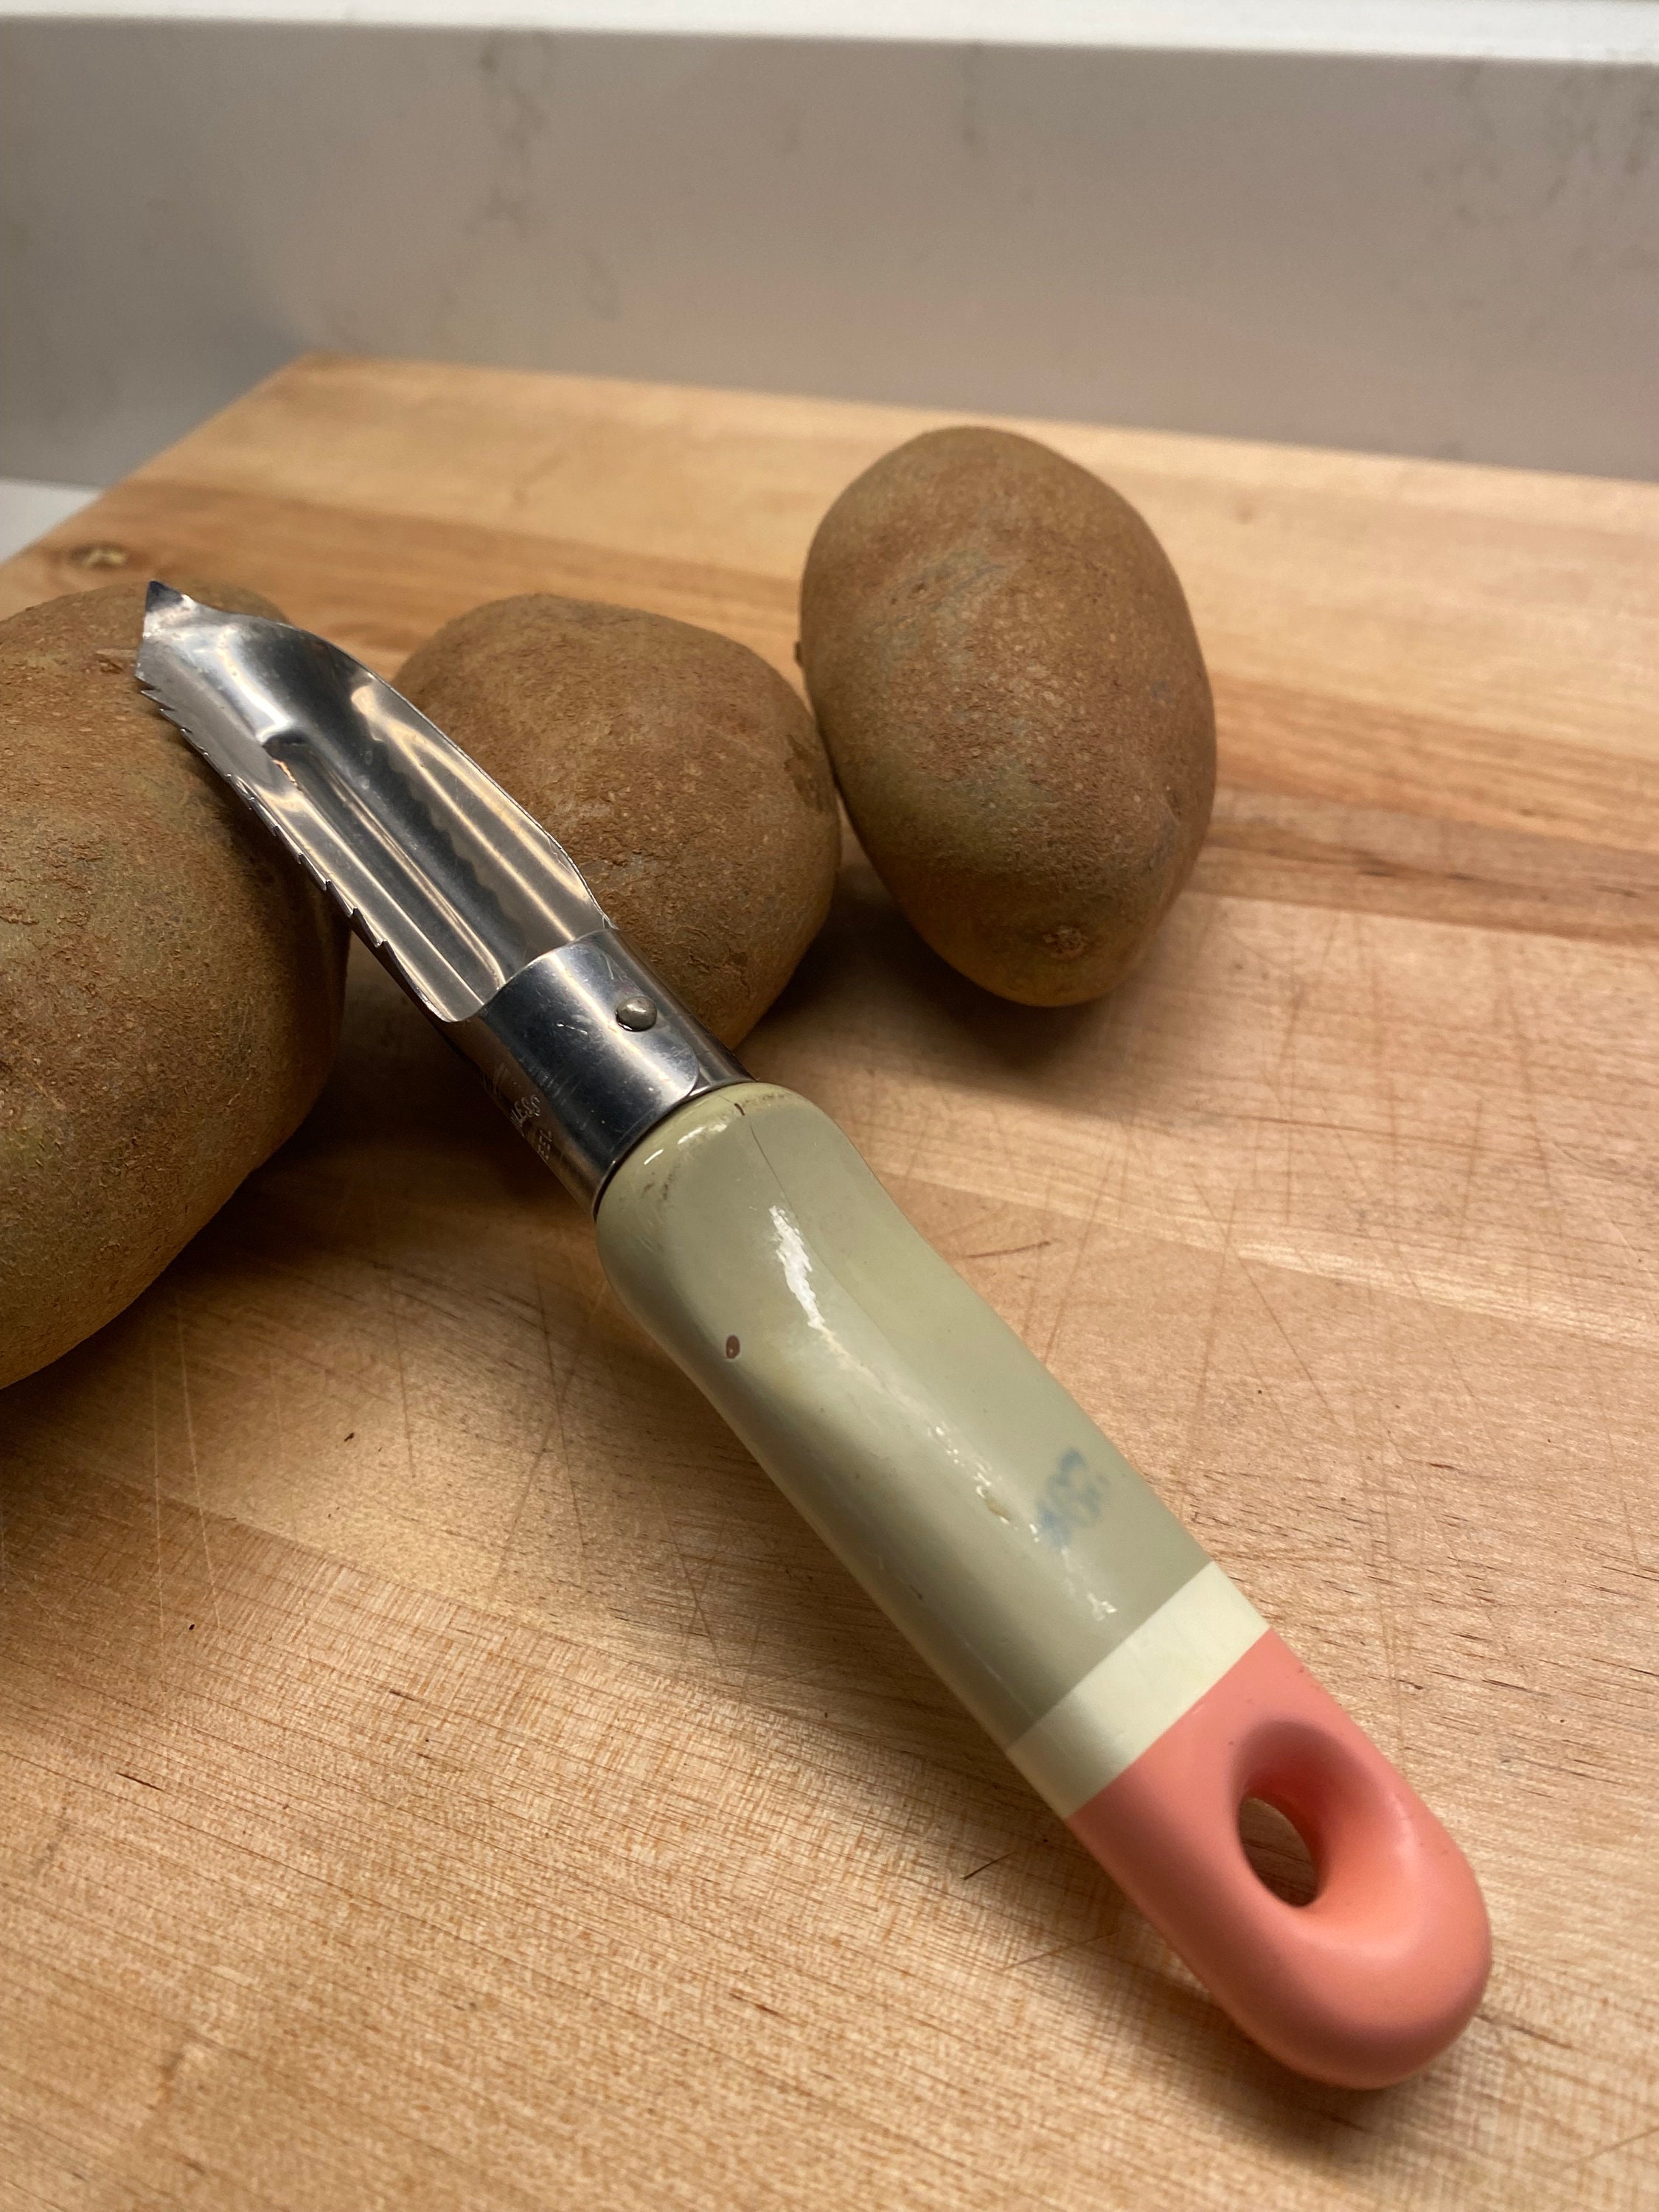 1pc fruit pelador de nopales vegatable peel remover hand peeler